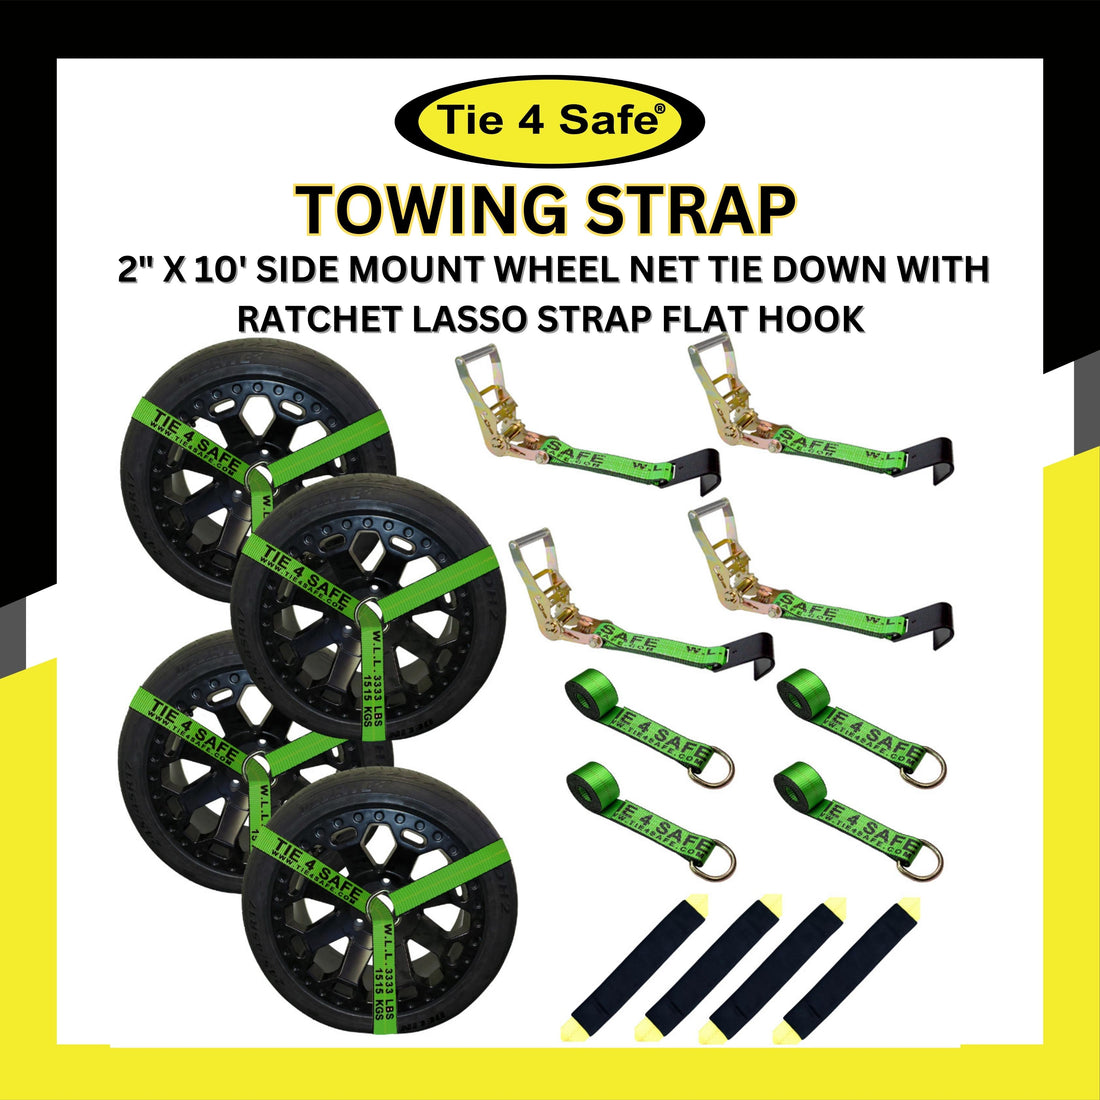 USA 4 Pack 2" x10' Side Mount Wheel Net Tie Down With Ratchet Lasso Strap Flat Hook